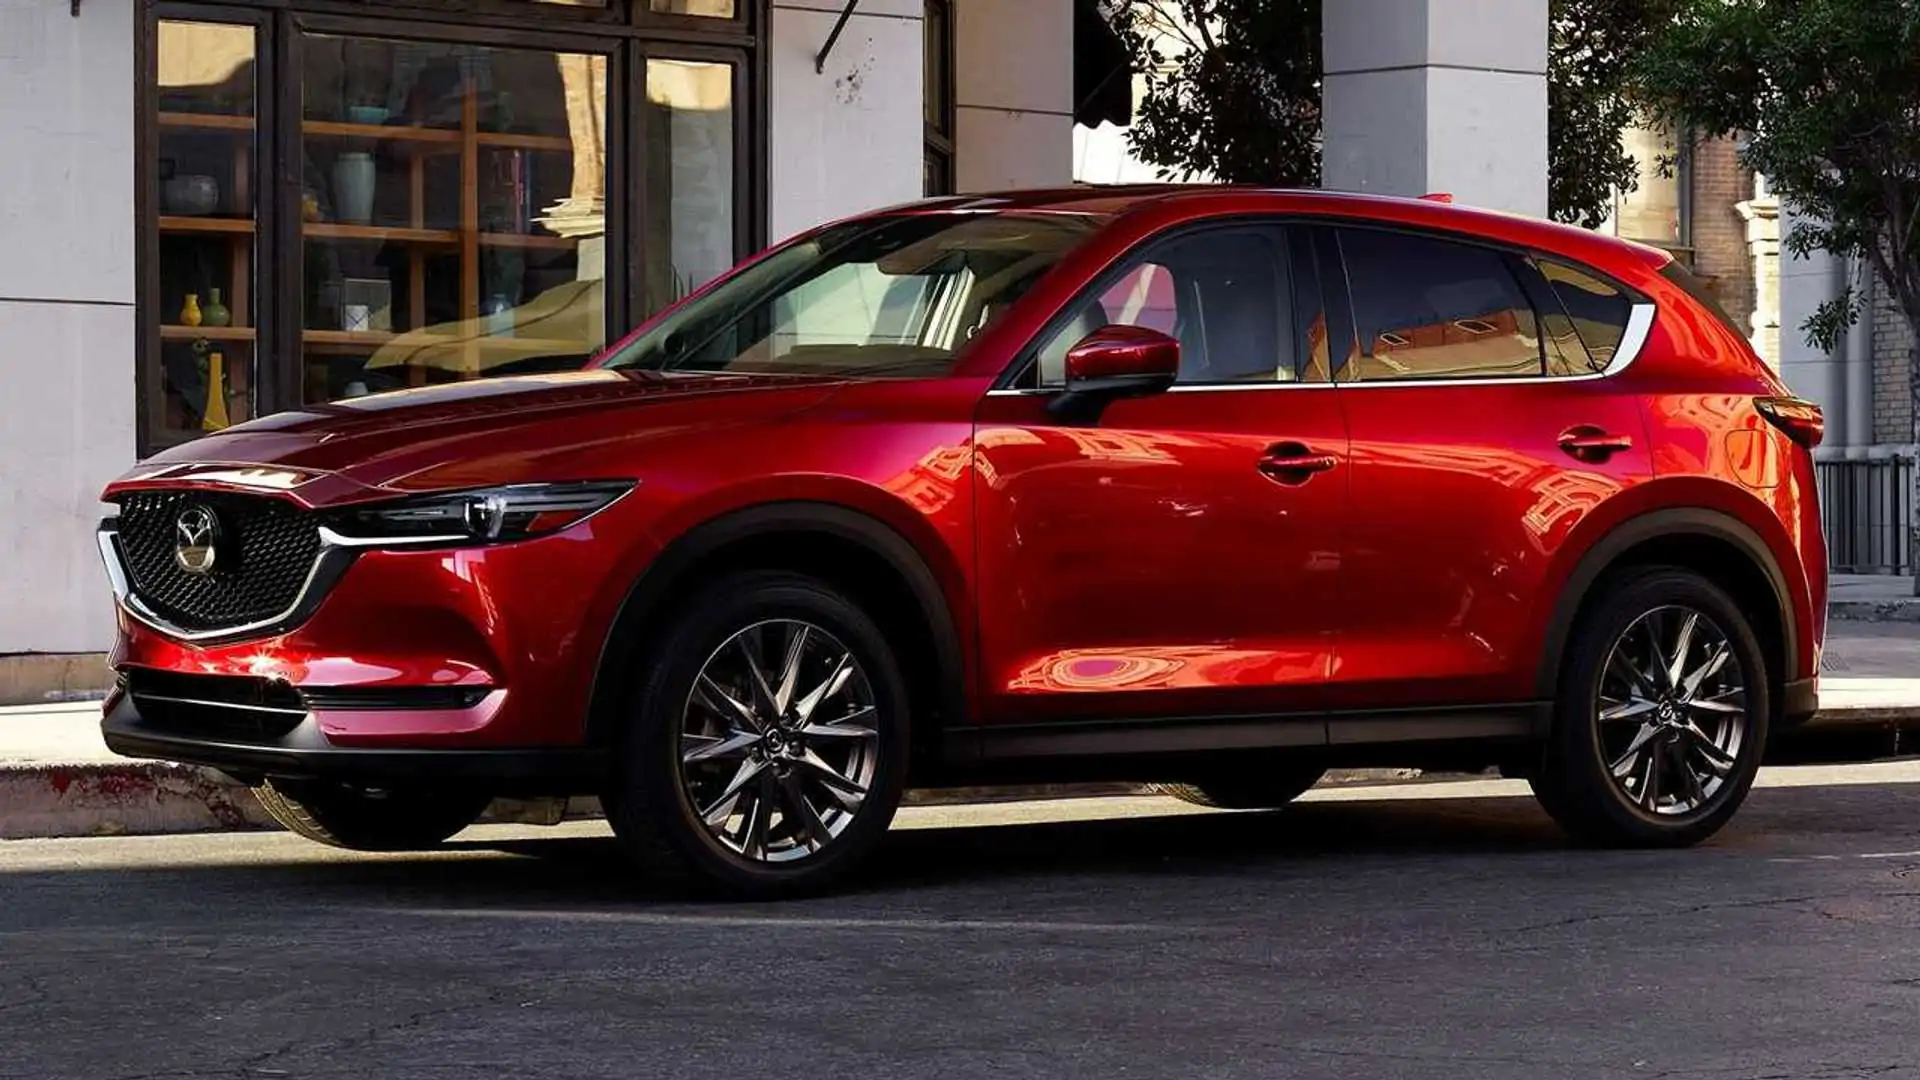 Mazda Announces Hybrid Drivetrain for Next-Generation CX-5